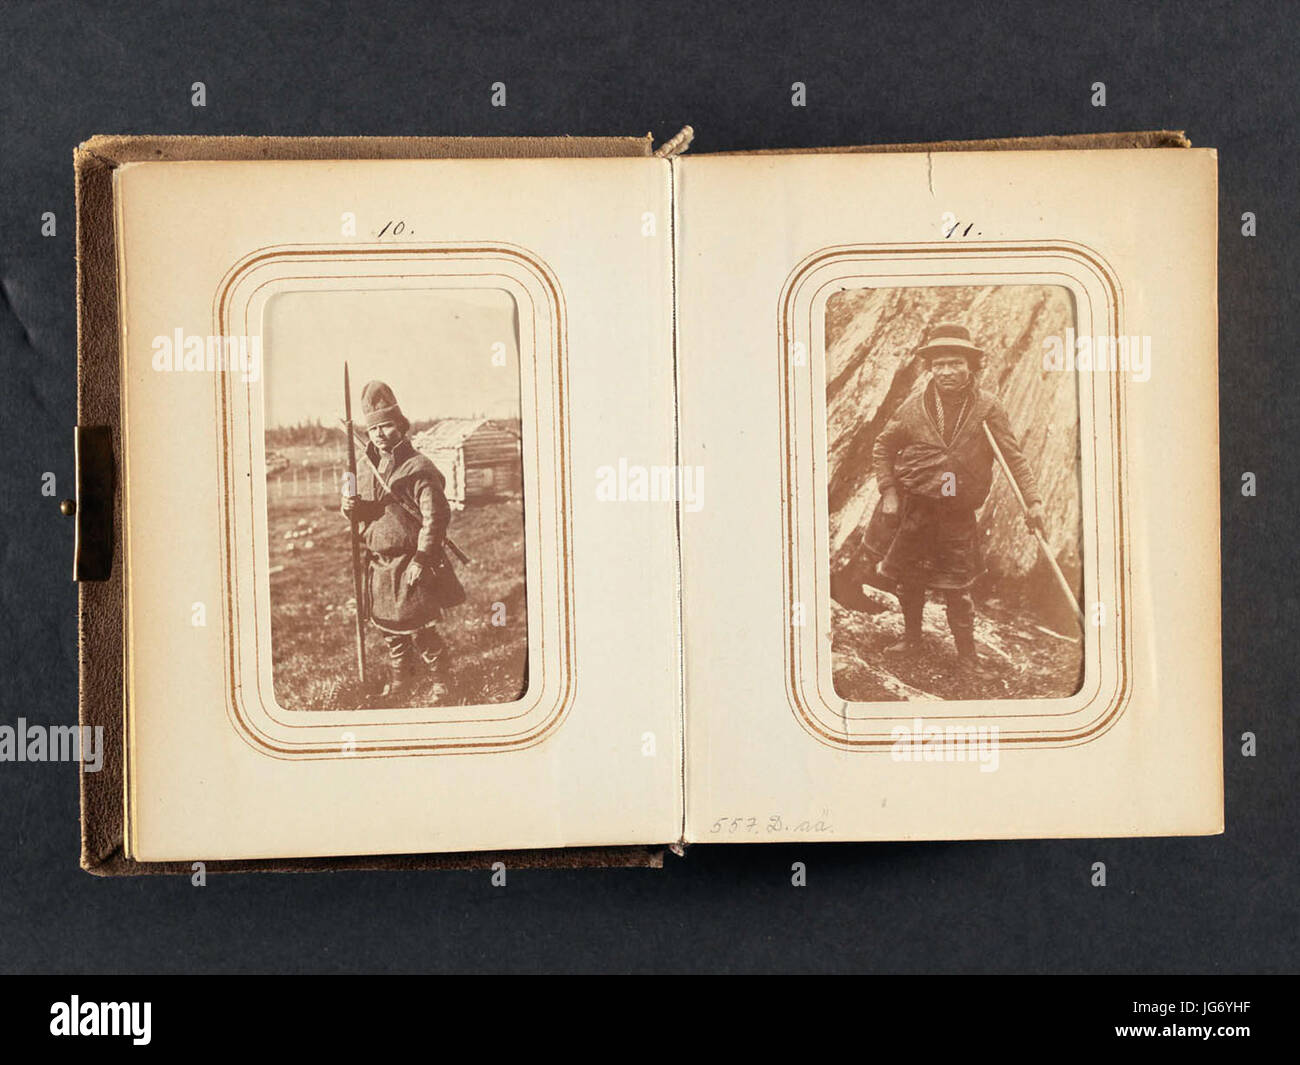 Samisk man med spjut. Lotten von Düben 1868 - Nordiska Museet - NMA.0033092 2 Stock Photo